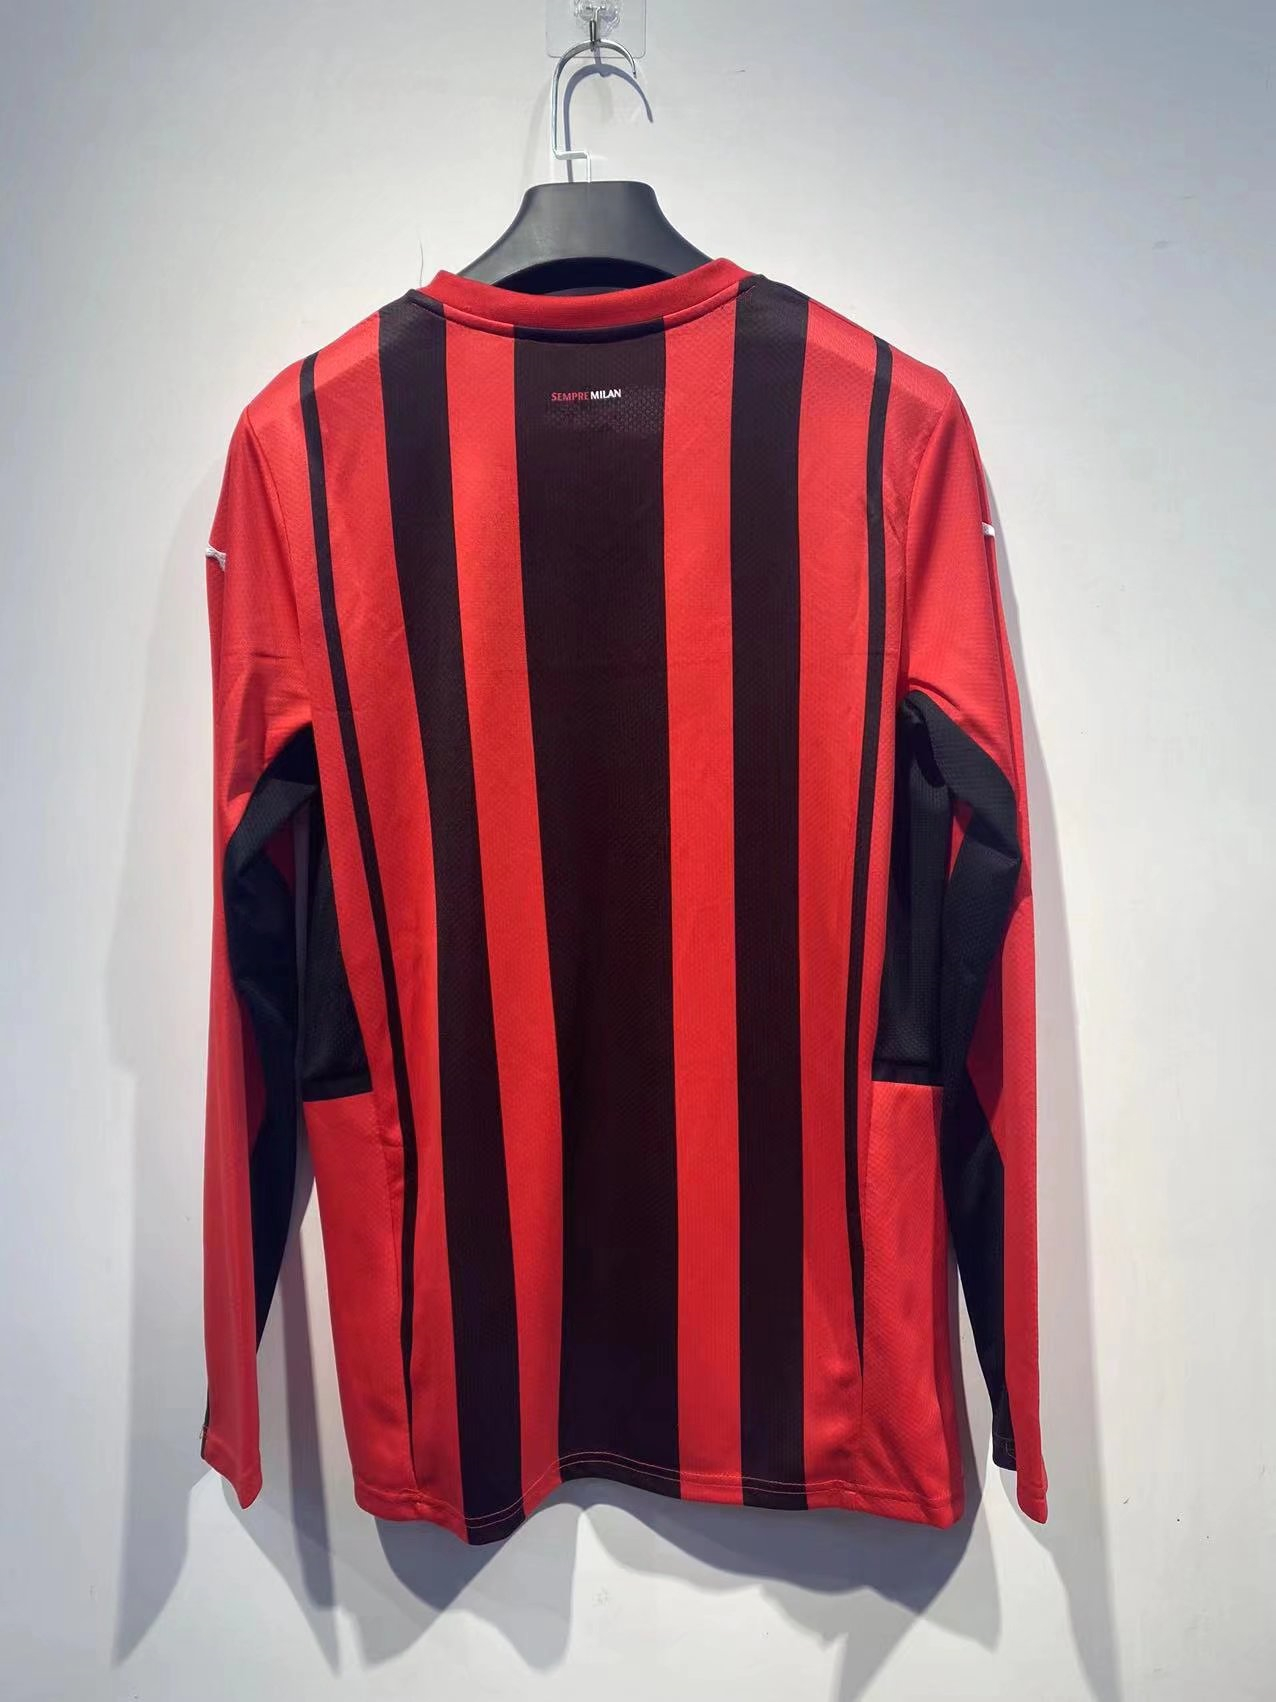 AC Milan 2021-22 Home Long Sleeve Soccer Jerseys Men's